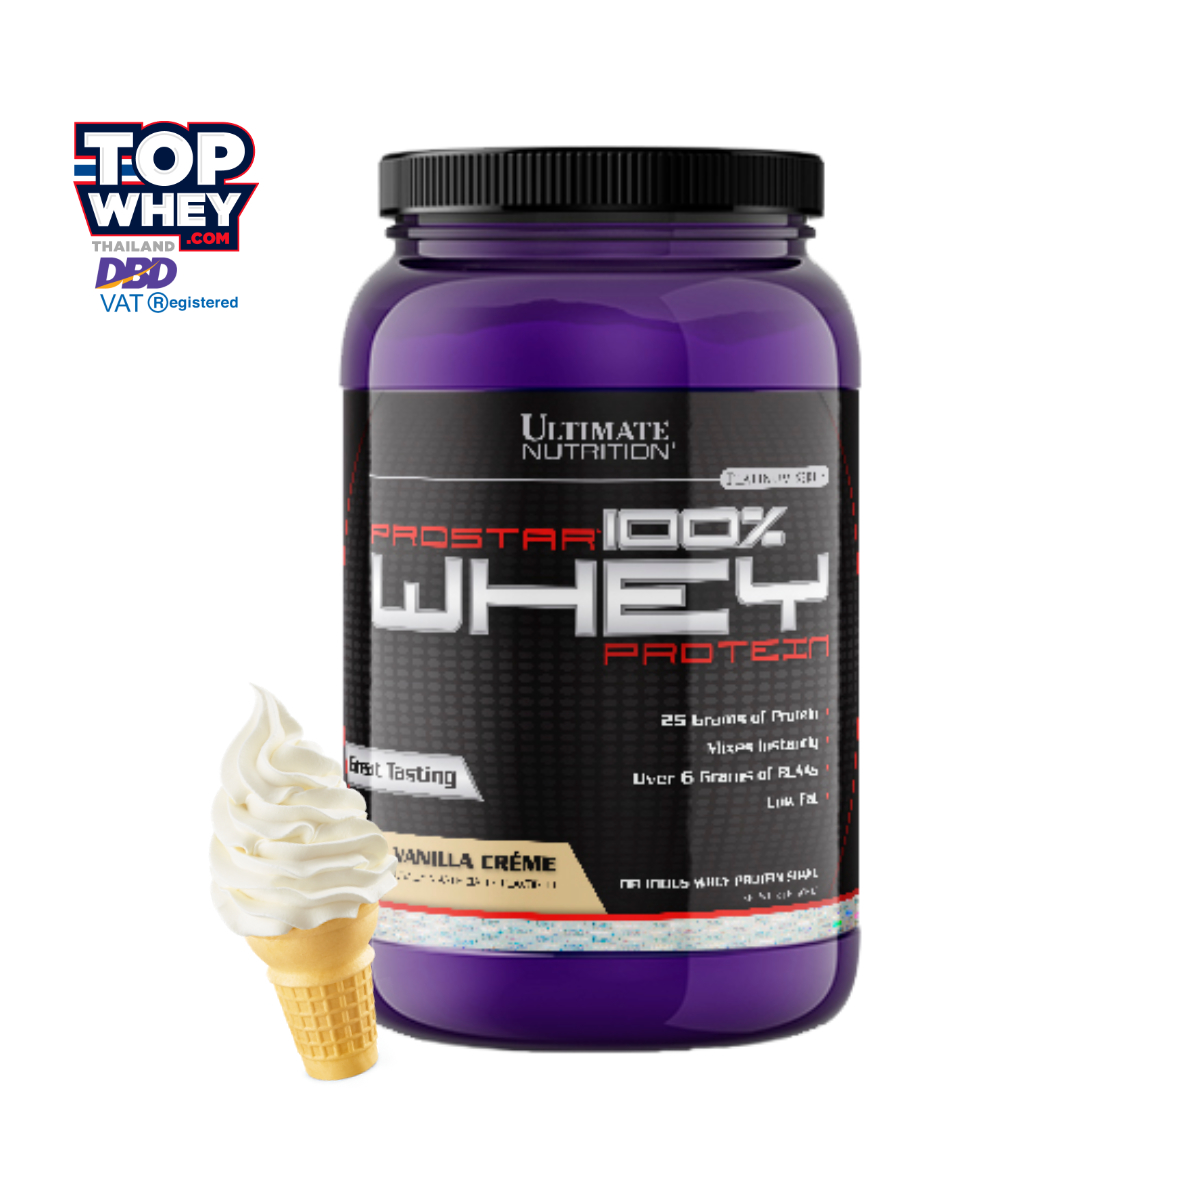 Ultimate Nutrition ProStar Whey Protein 2 lbs – Vanilla – เวย์โปรตีนเสริมสร้างกล้ามเนื้อ   ฟื้นฟู-ซ่อมแซมกล้ามเนื้อที่สึกหรอ  มีกรดอะมิโนจำเป็นมากกว่า 20 ชนิด  สามารถทานระหว่างมื้ออาหาร ก่อน-หลังออกกำลังกาย